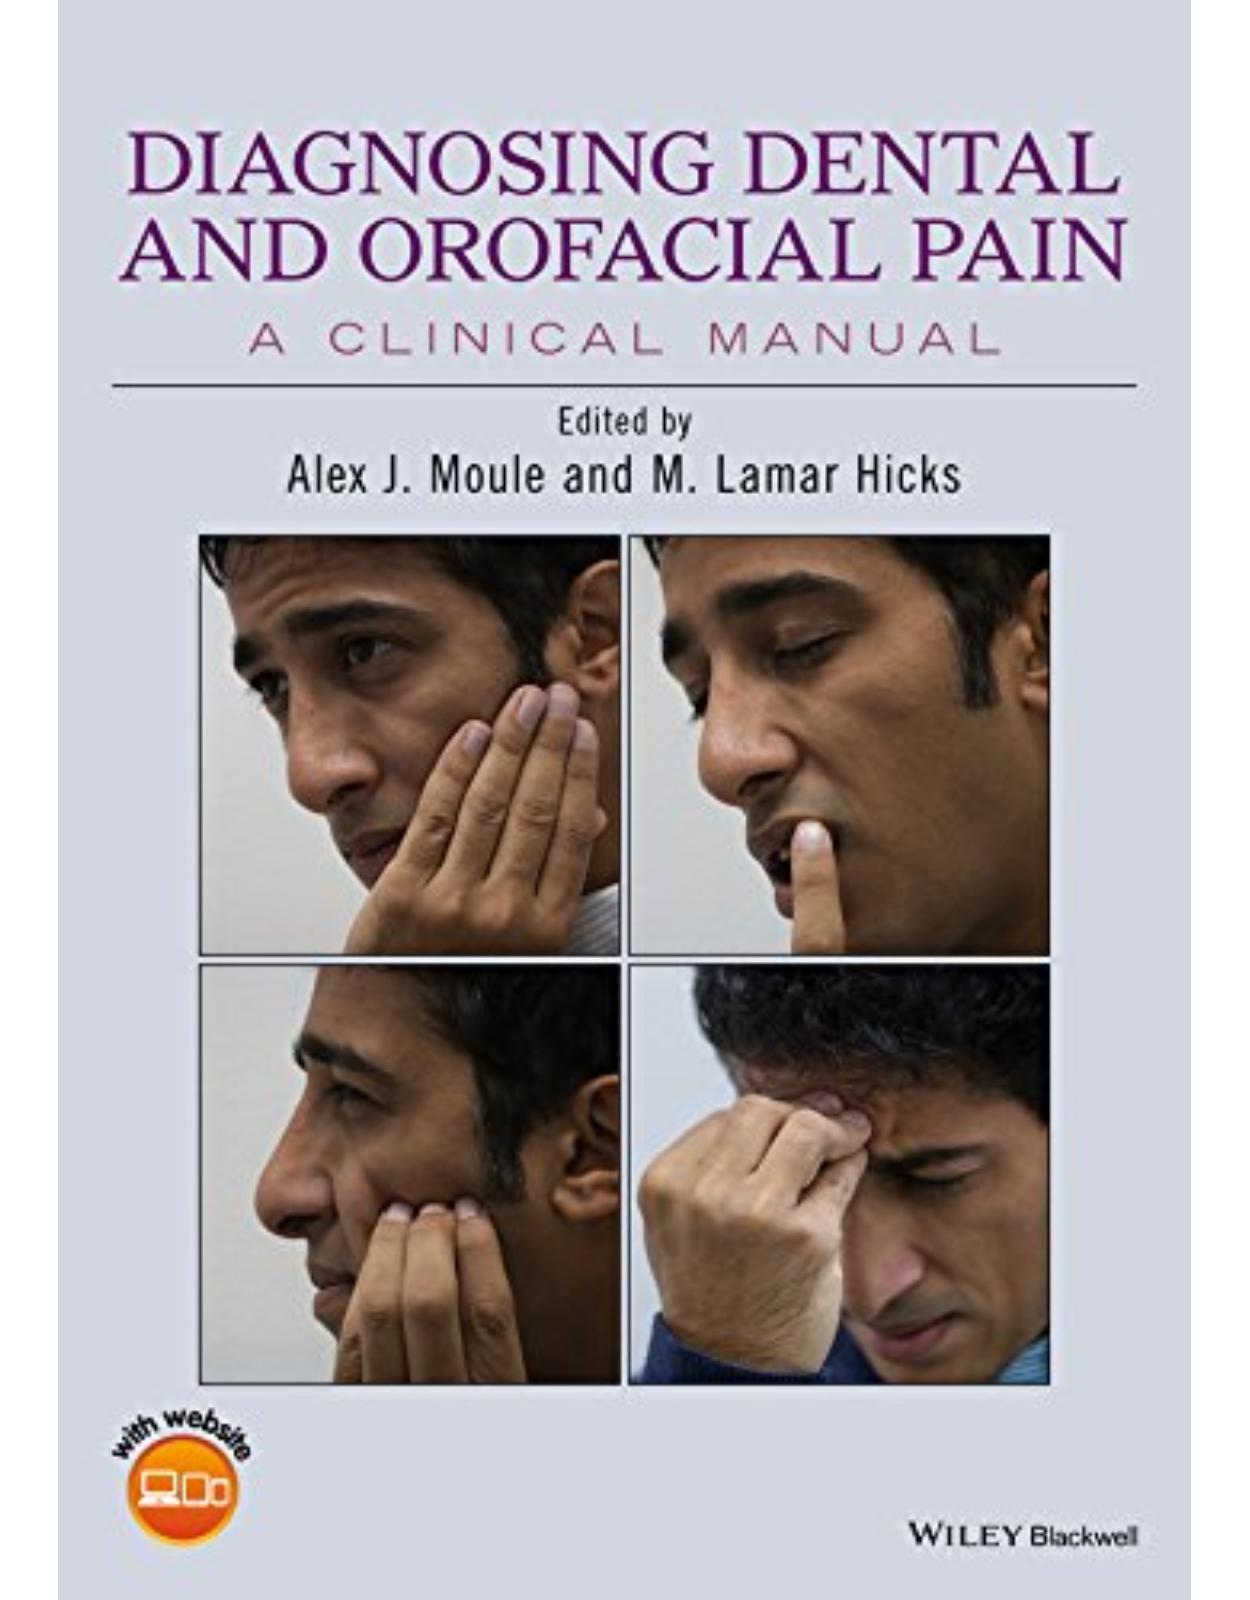 Diagnosing Dental and Orofacial Pain: A Clinical Manual